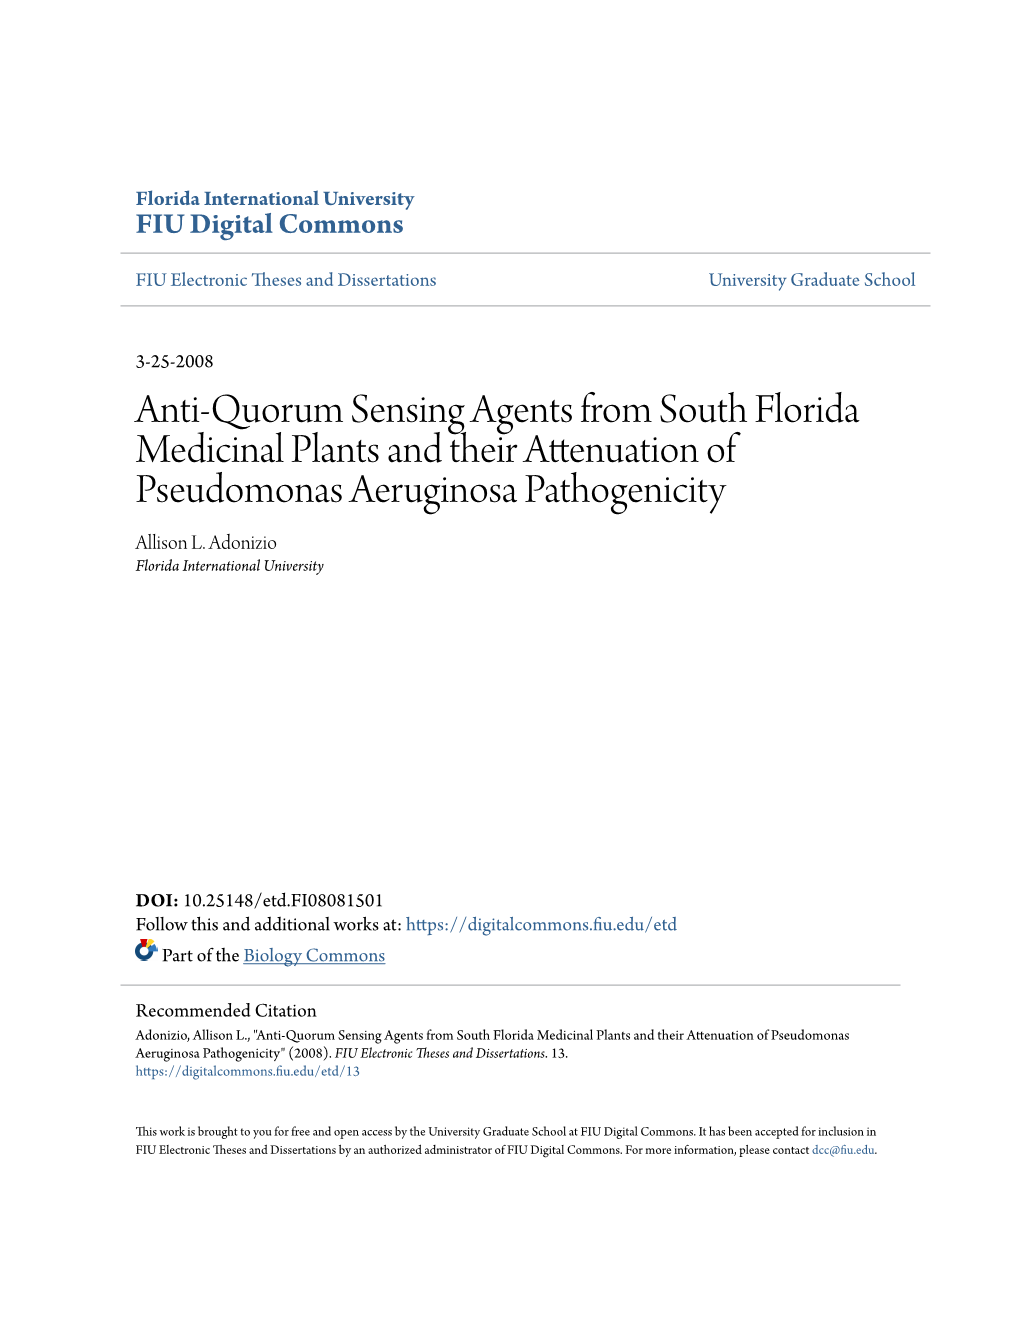 Anti-Quorum Sensing Agents from South Florida Medicinal Plants and Their Attenuation of Pseudomonas Aeruginosa Pathogenicity Allison L